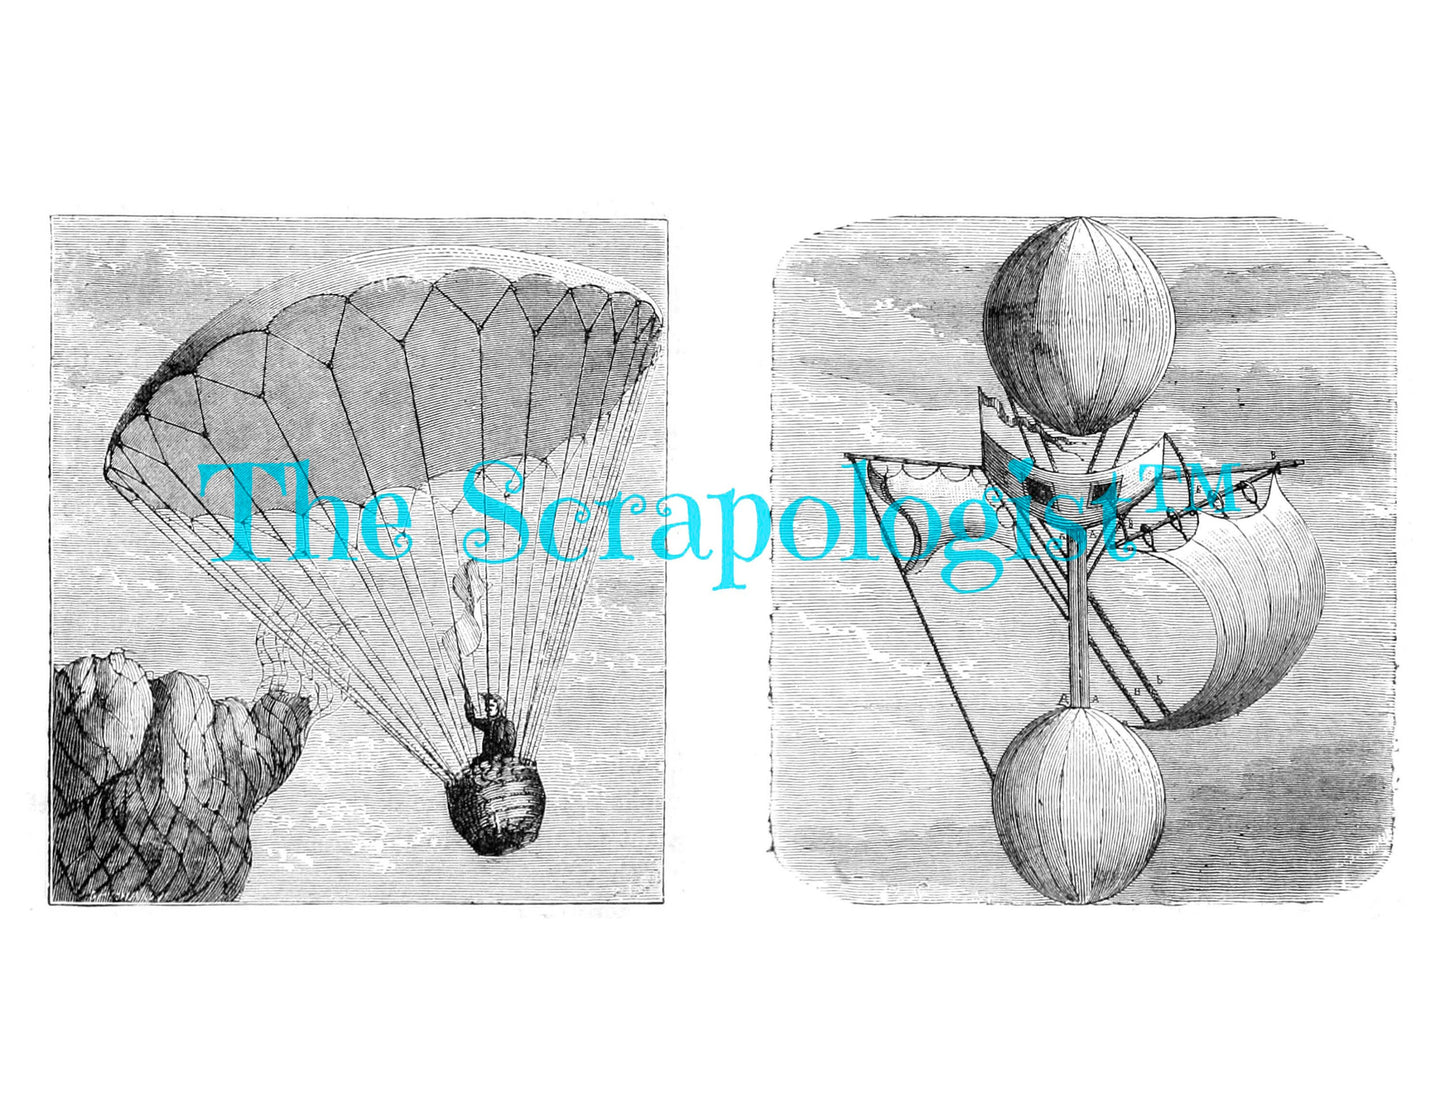 Steampunk Hot Air Balloons, Printable Junk Journal Kit, Collage Papers, Vintage Ephemera | Digital Download